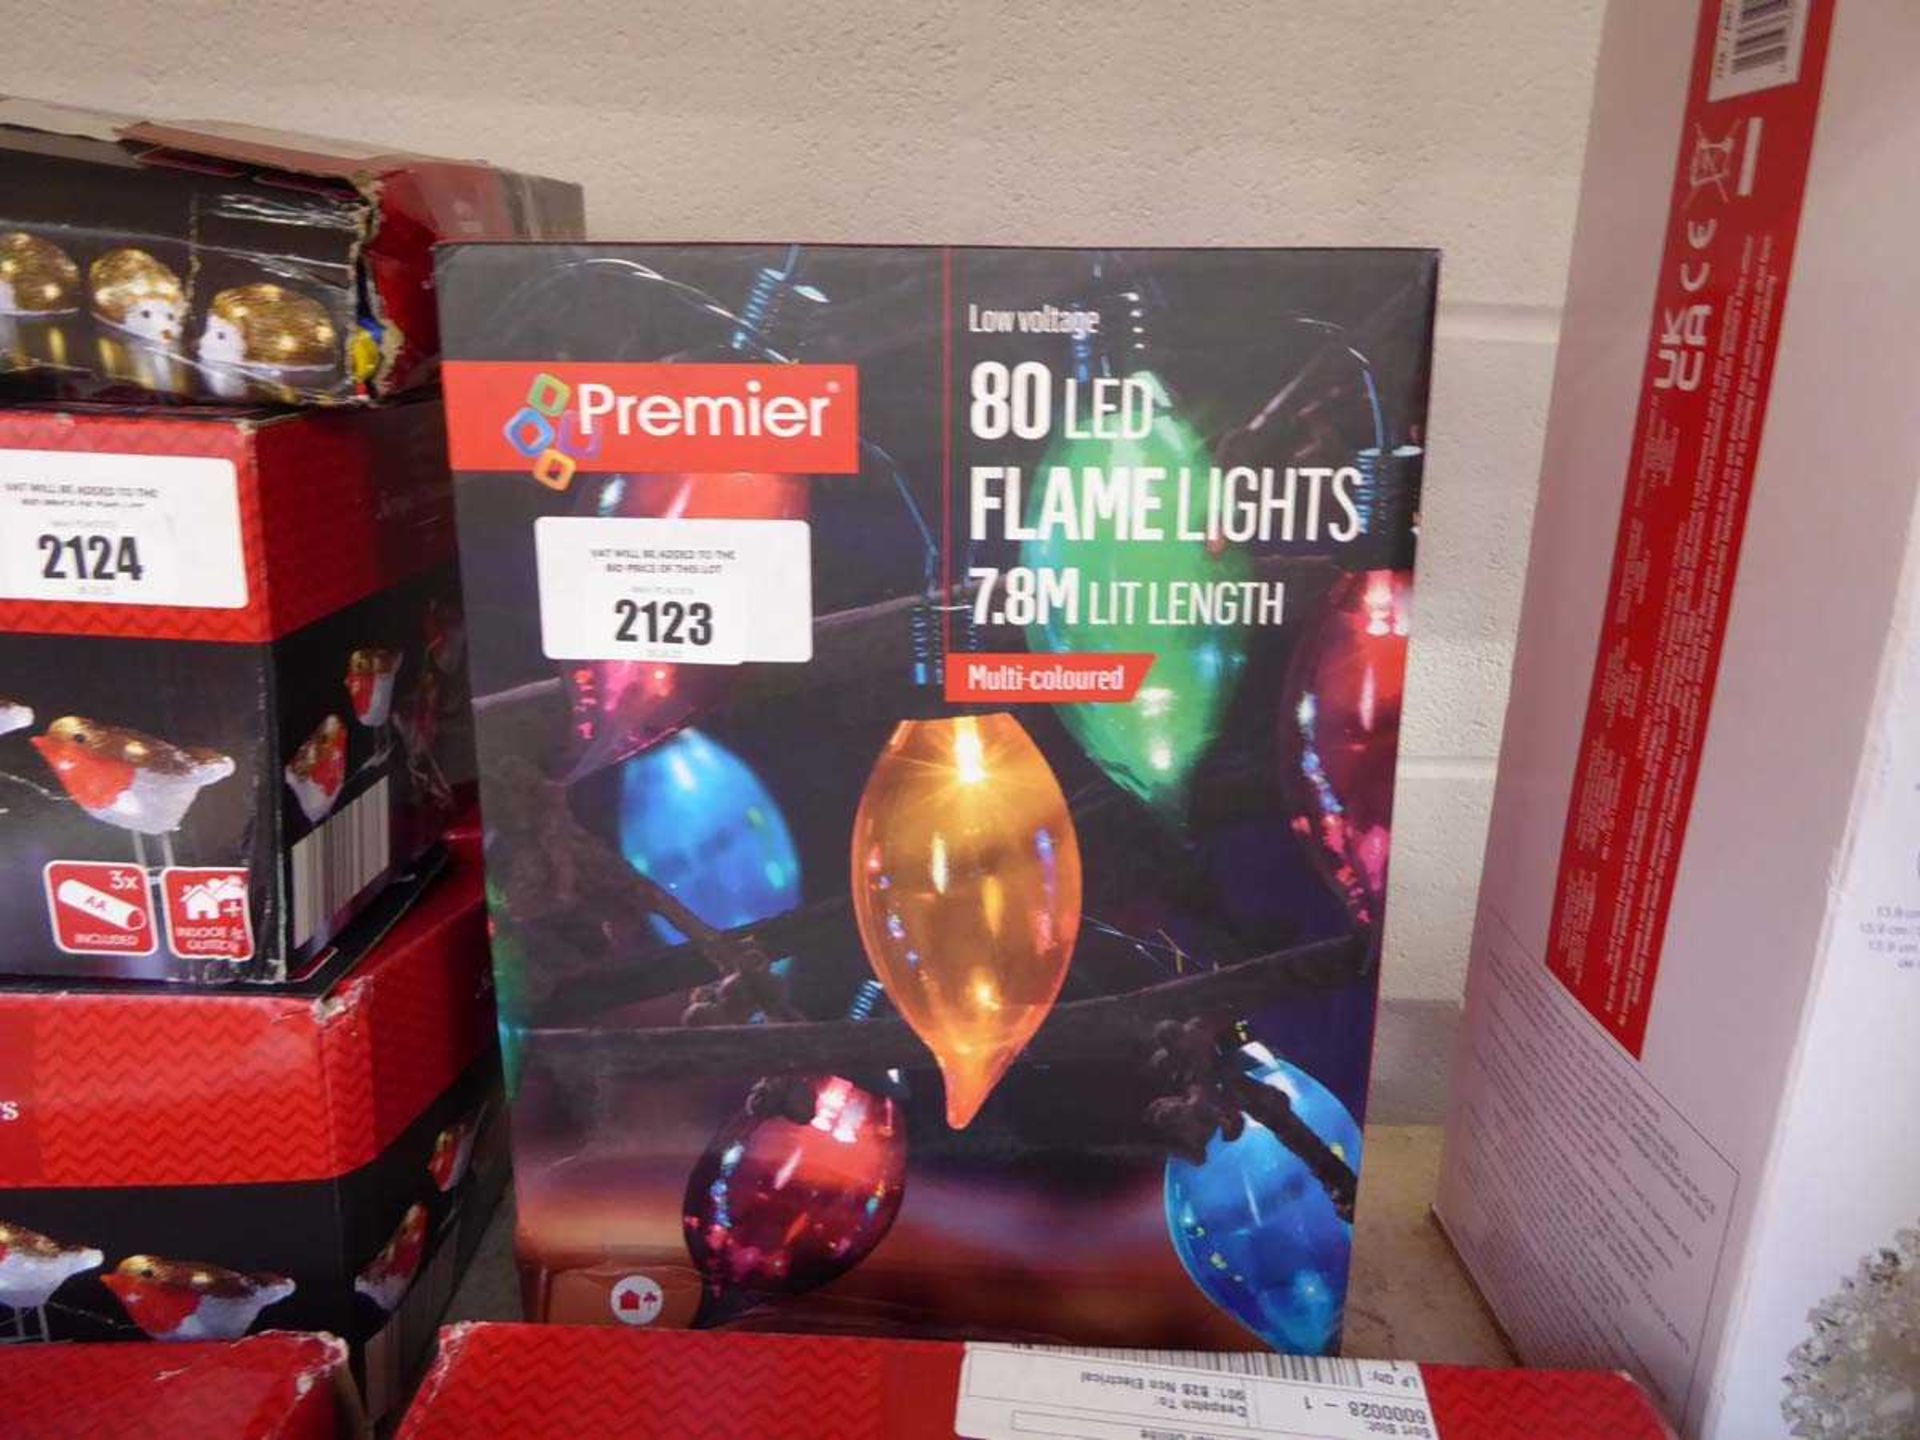 +VAT Boxed set of 80 LED multicoloured flame lights